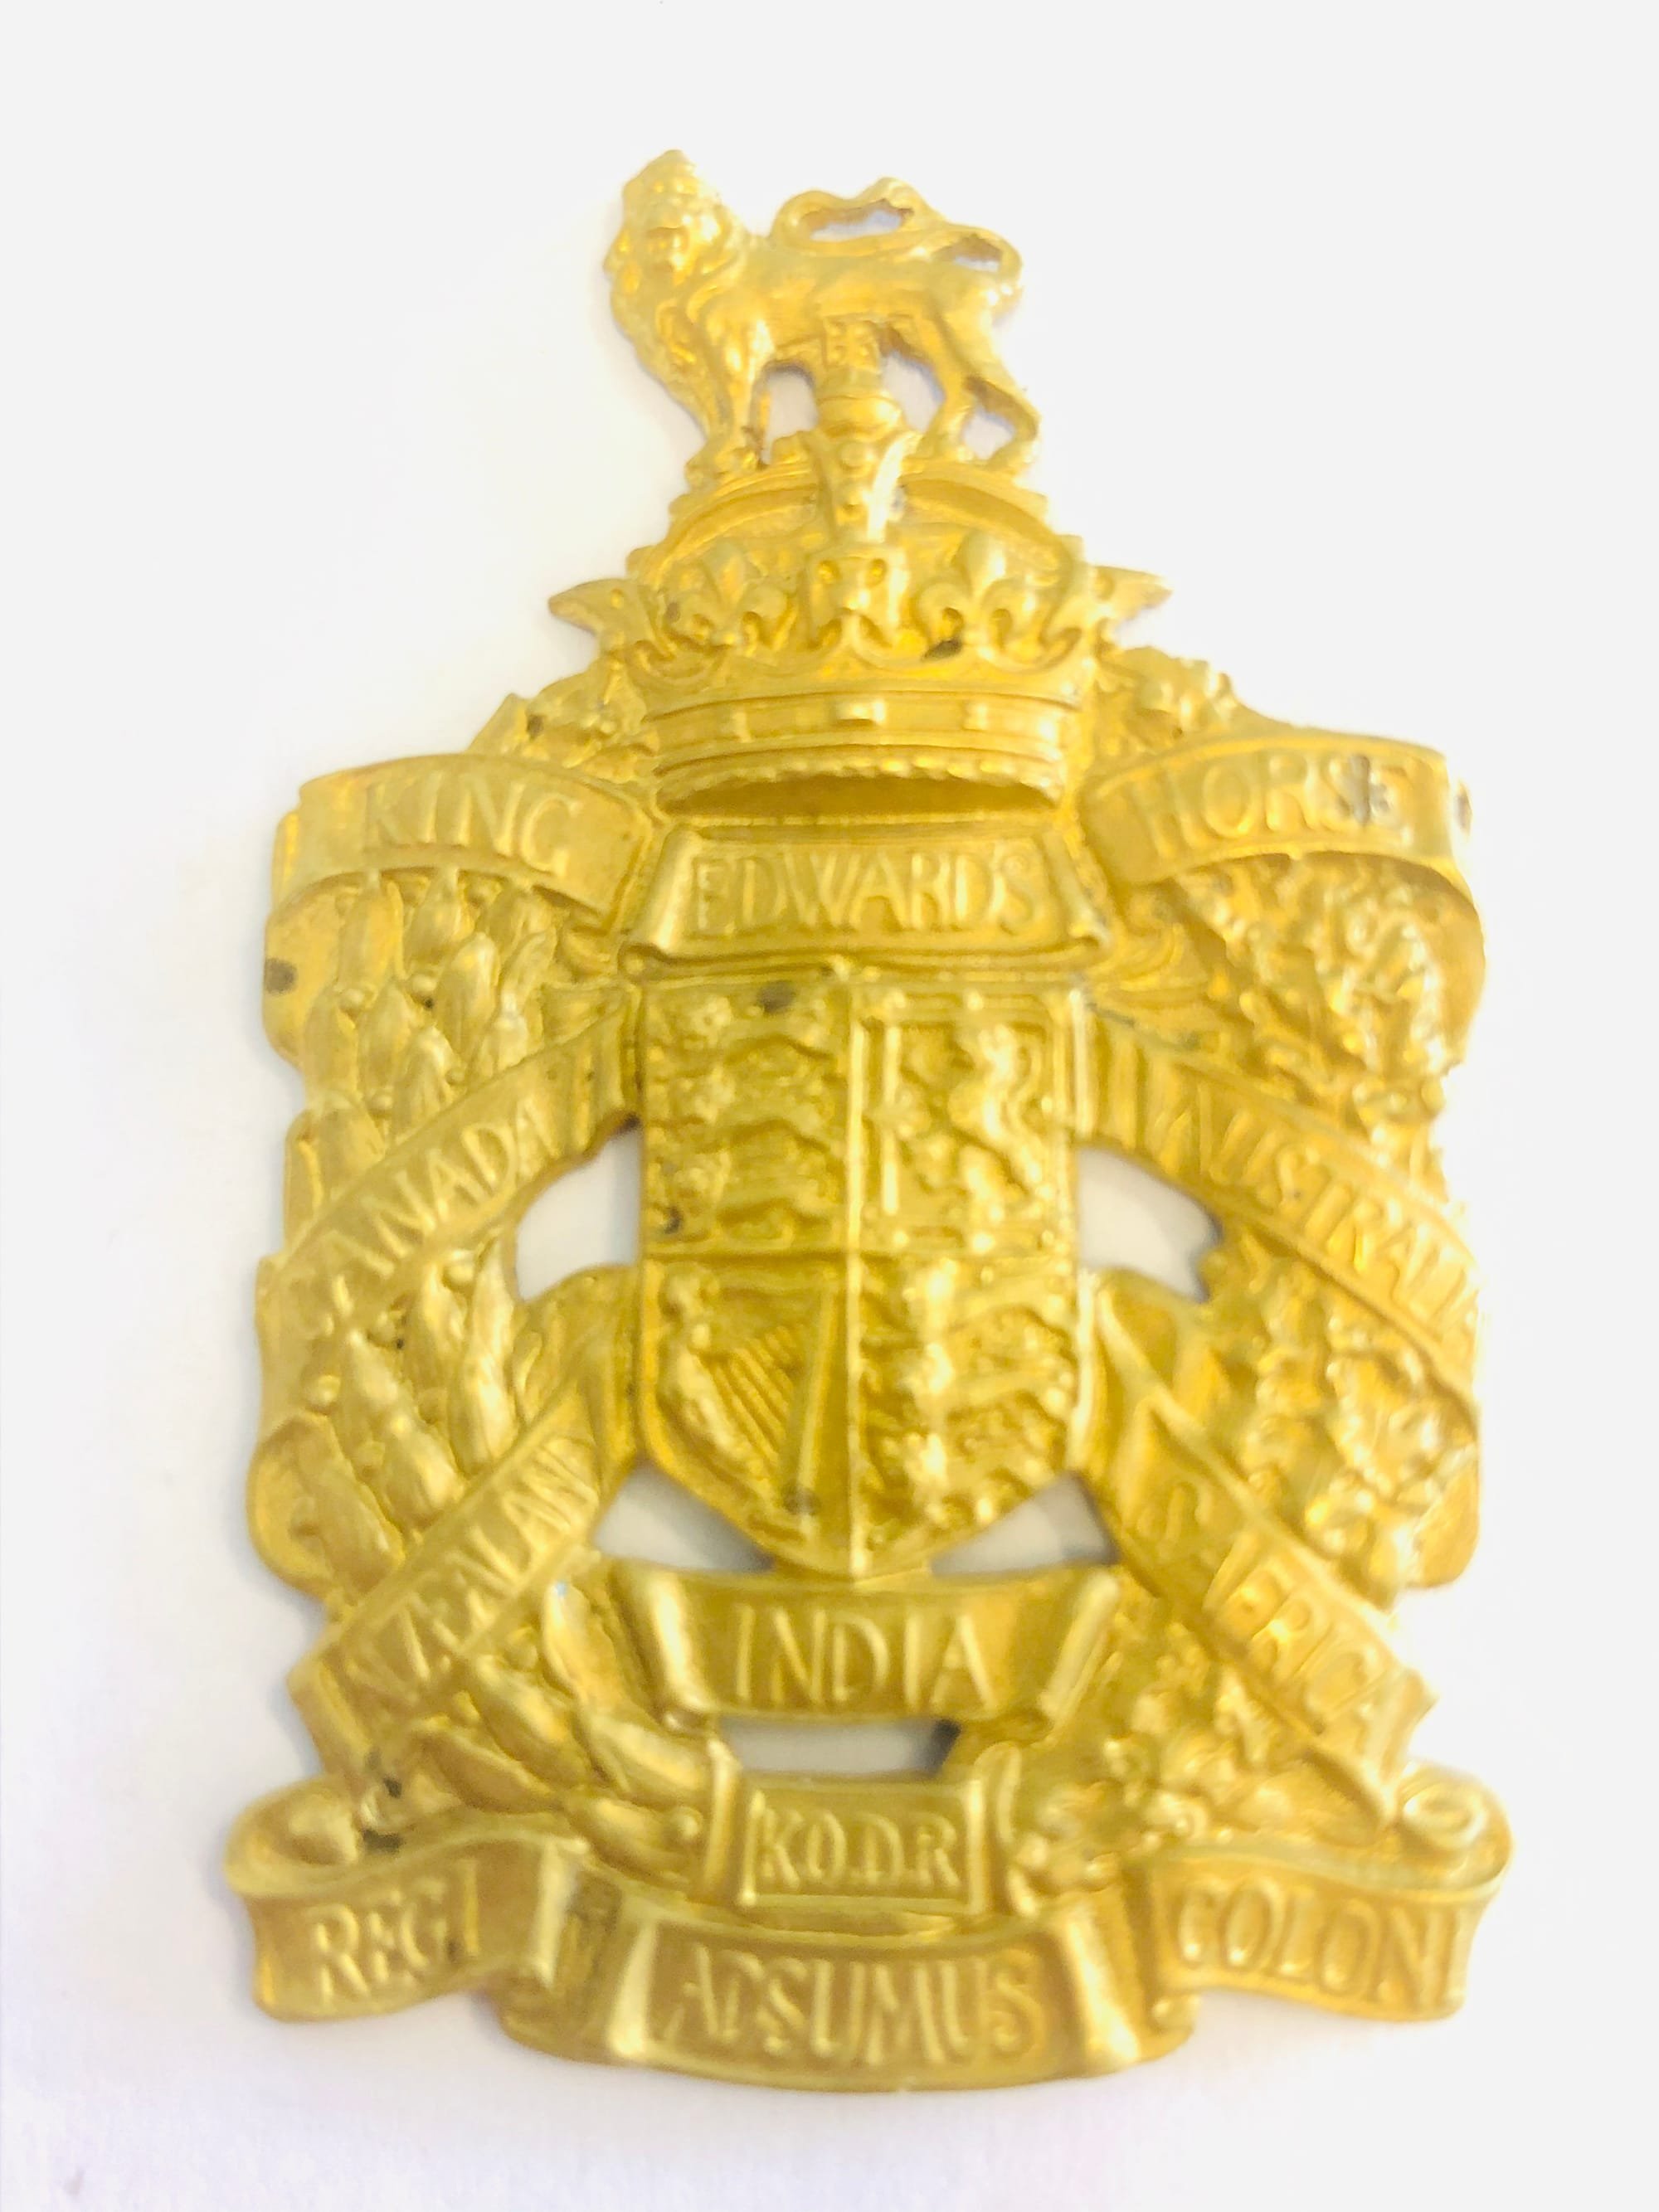 First Pattern KEH Headdress badge 1910-16